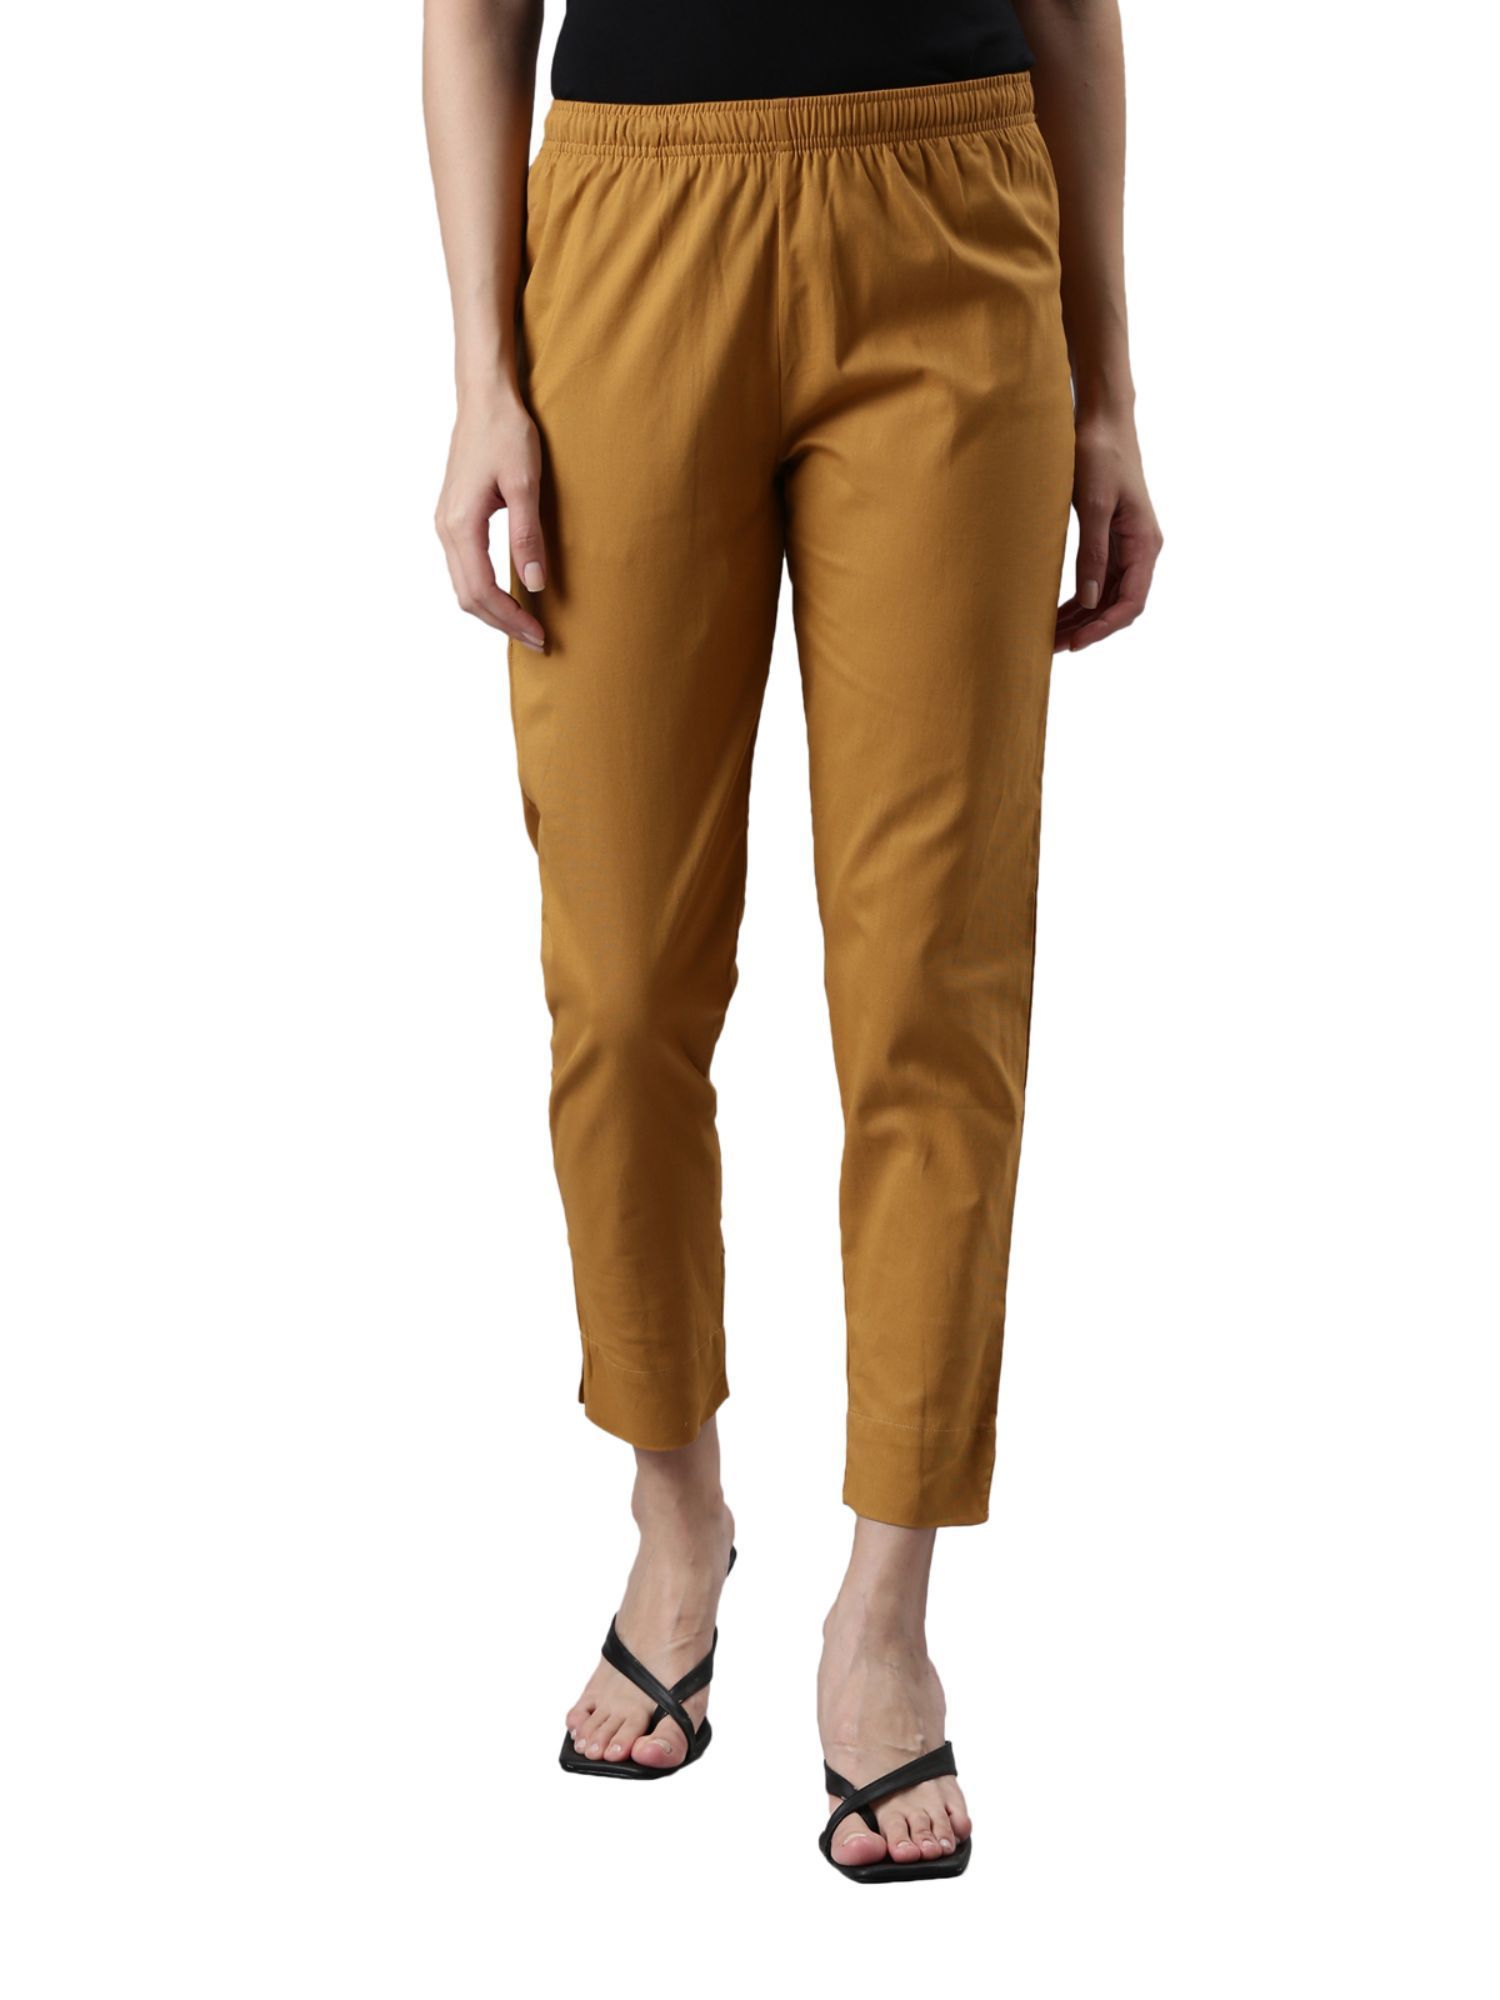 Go Colors Pants : Buy Go Colors Women Solid Light Beige Mid Rise Cotton  Pants Online | Nykaa Fashion